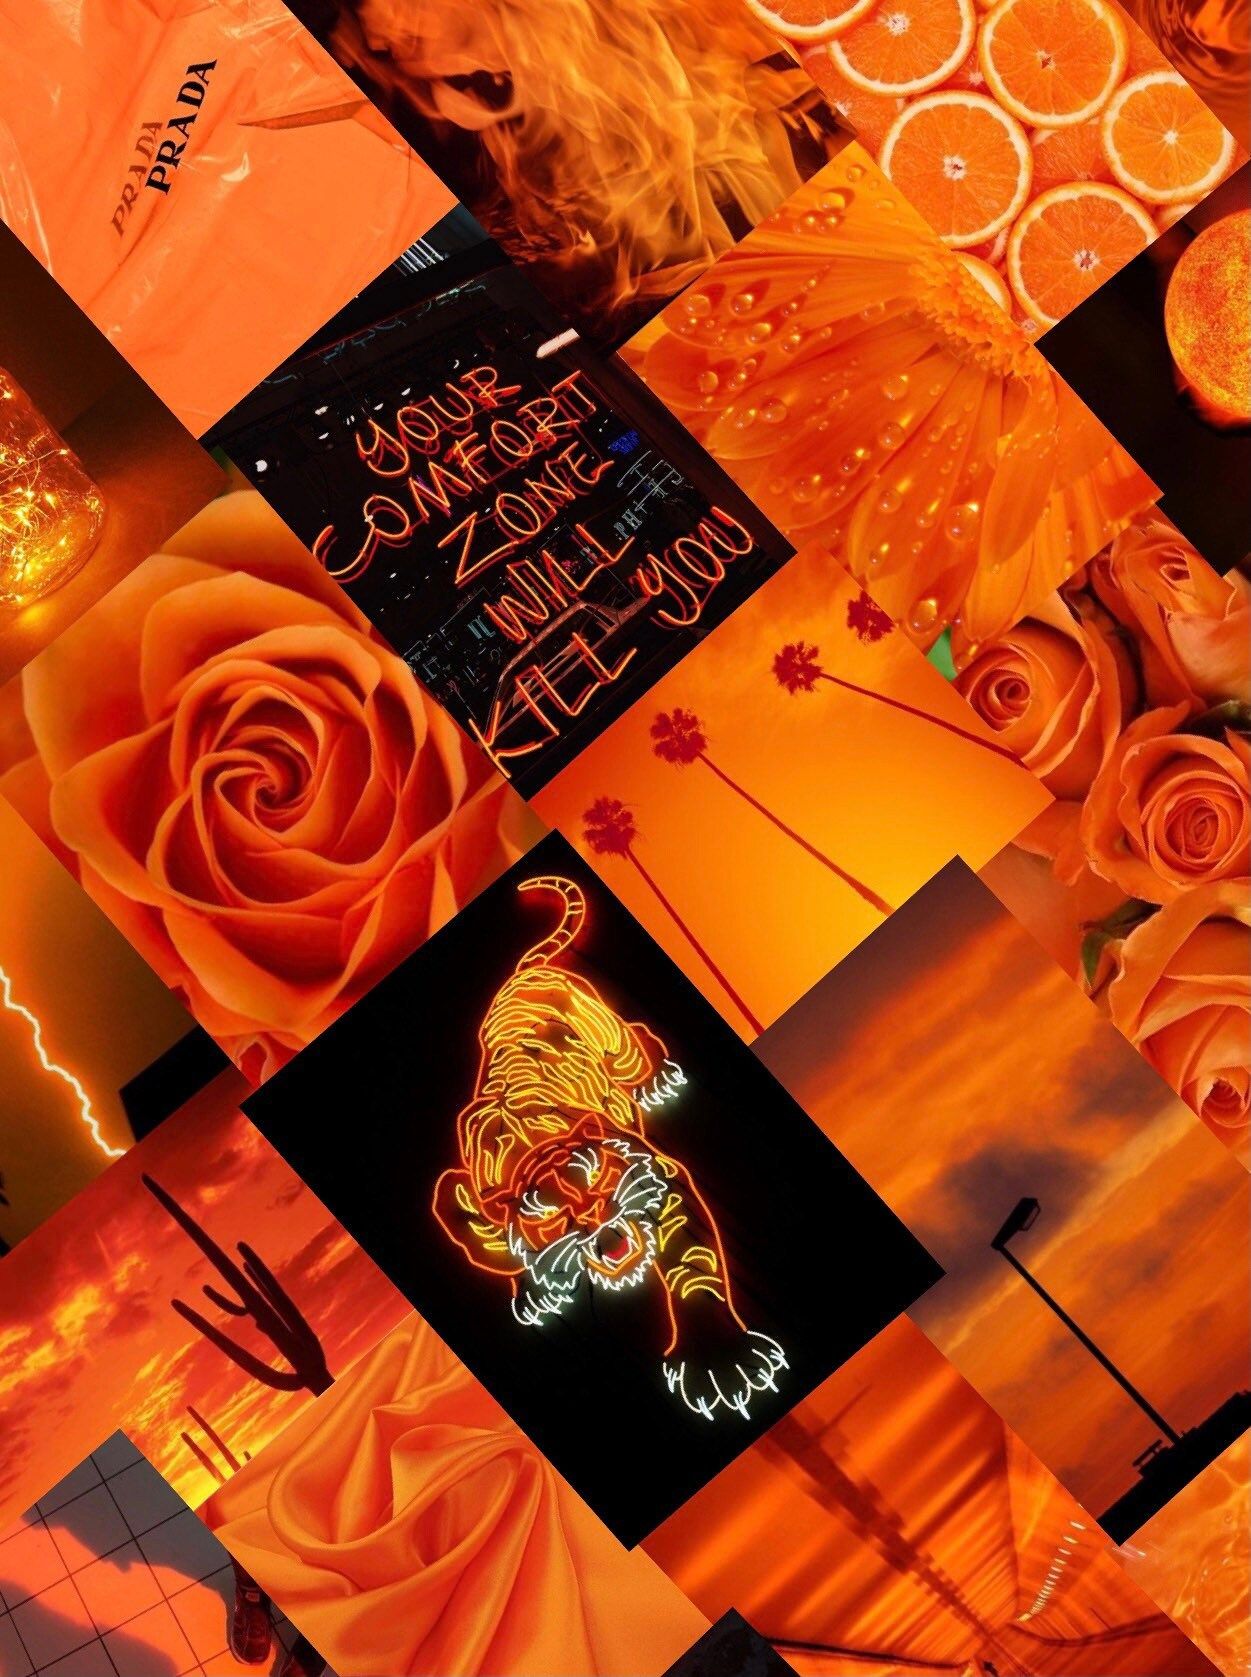 Aesthetic orange background with a collage of orange images - Neon orange